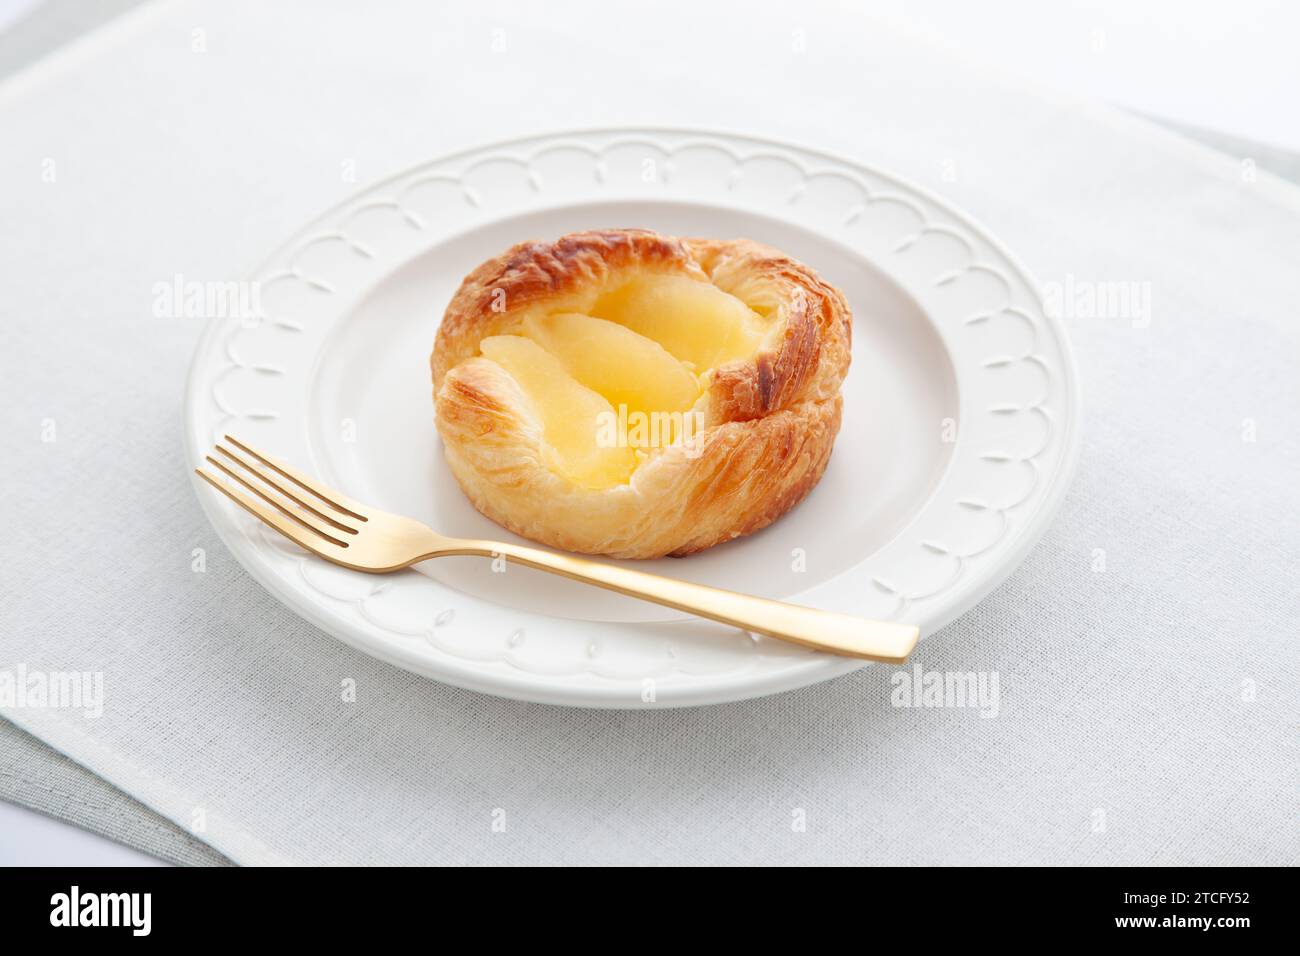 apple pie on plate on table Stock Photo